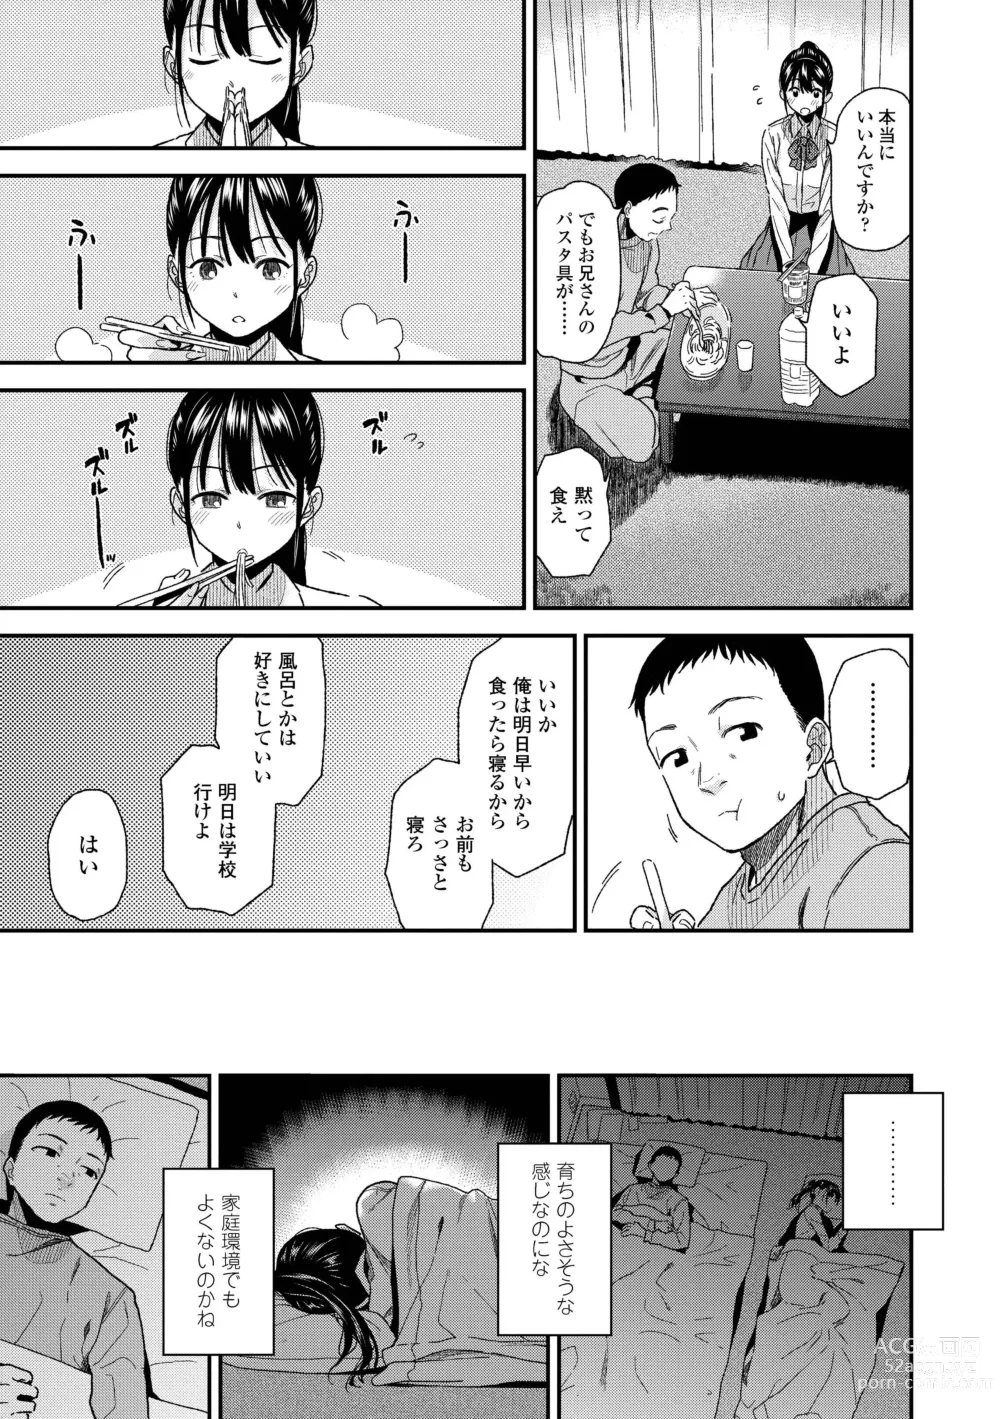 Page 9 of manga BorderLine